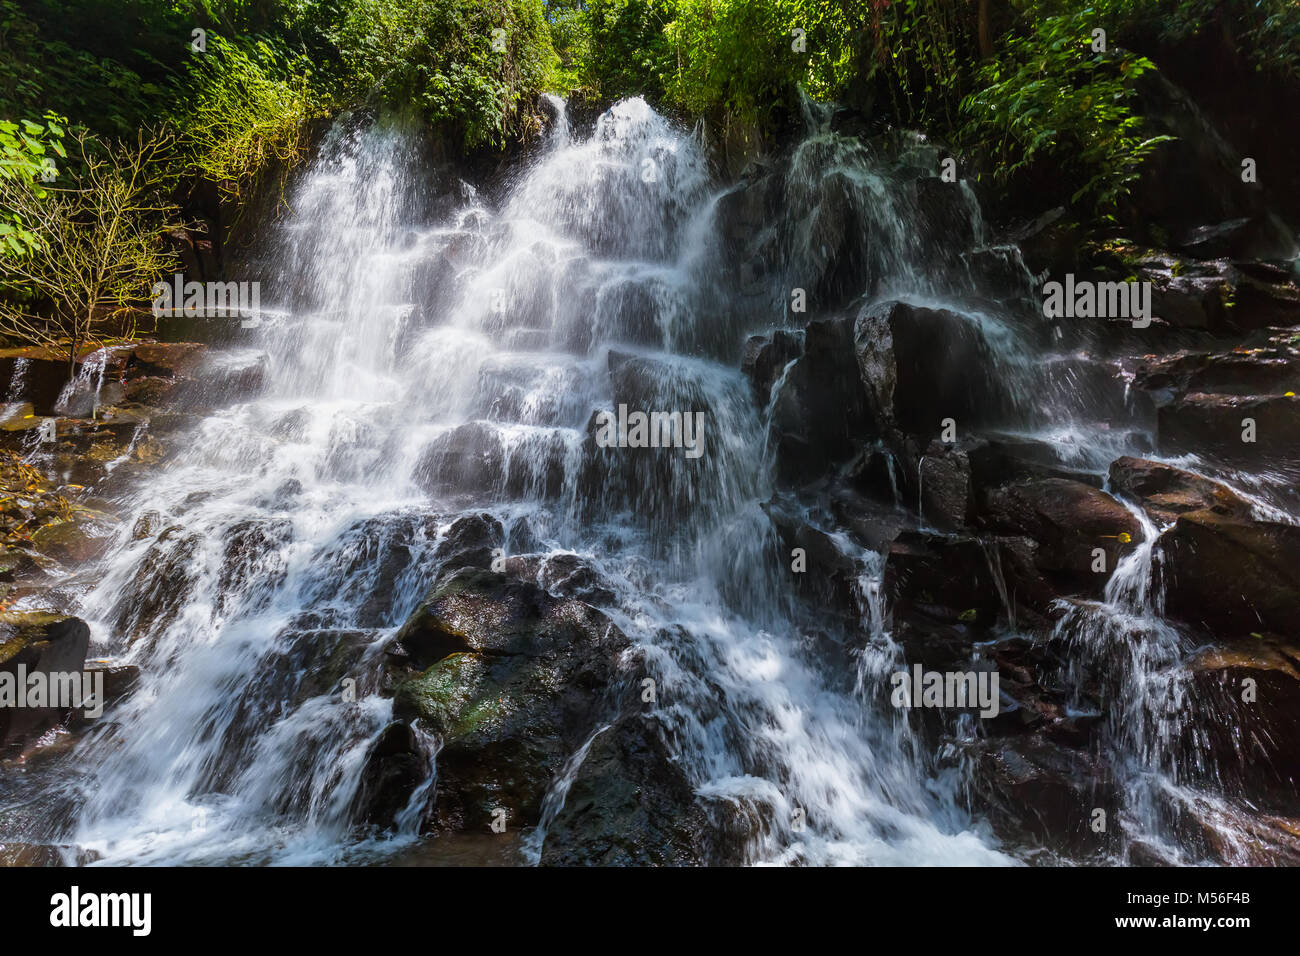 Kanto Lampo Waterfall on Bali island Indonesia Stock Photo